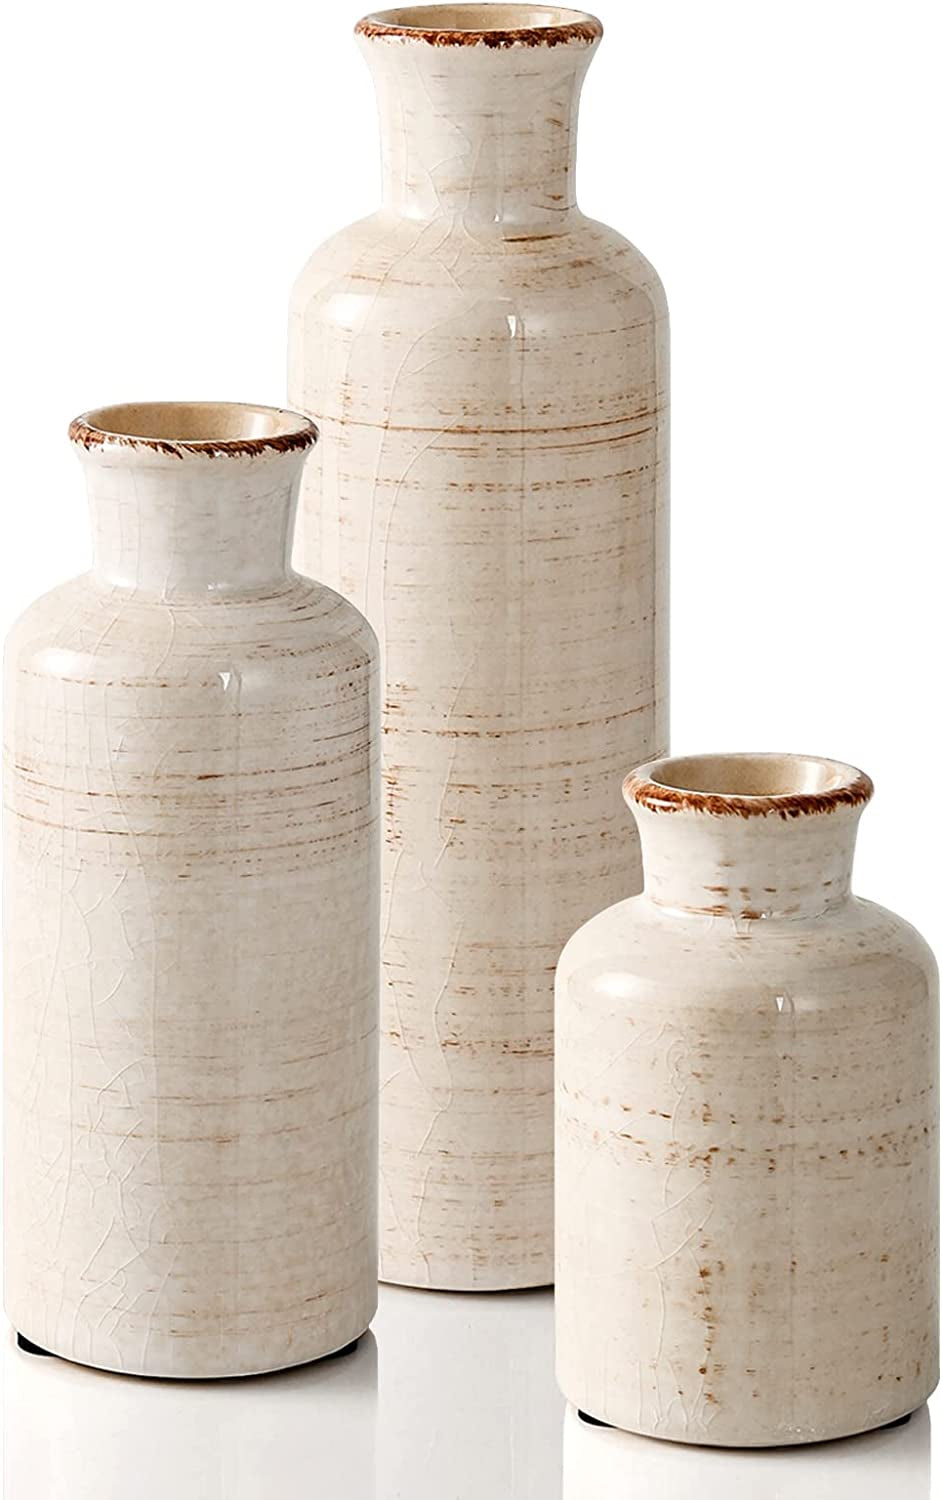 Ceramic Vase for Decor Set of 3 Small Vases, Vases for Rustic Home Decor Accent, Modern Farmhouse Vase Sets for Living Room Decorations, Ideal Shelf Décor, Table, Bookshelf, Entryway